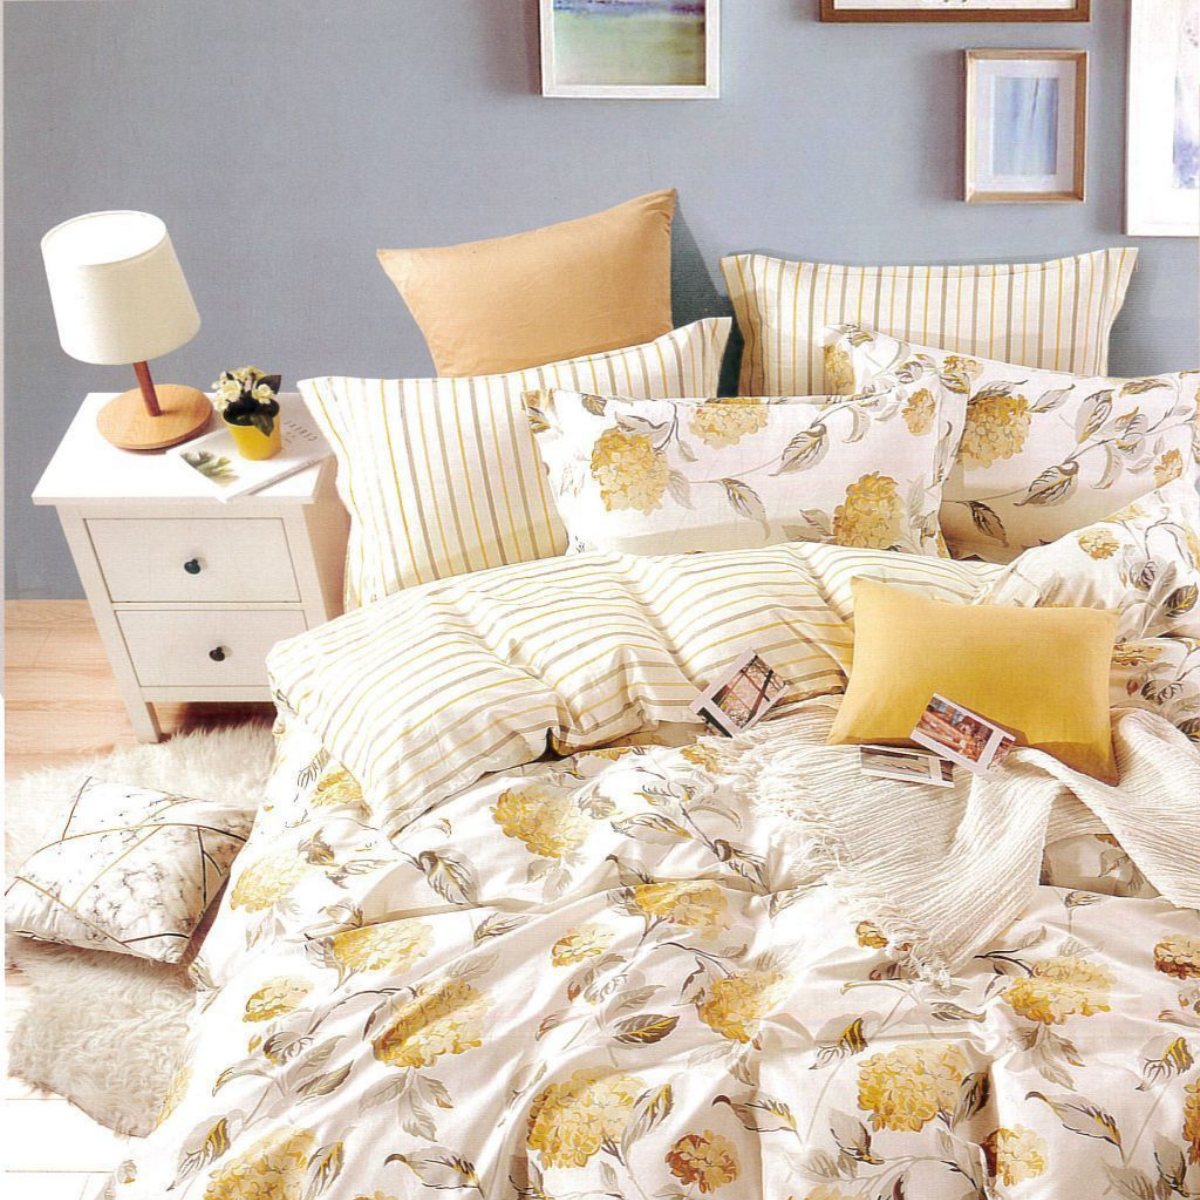 Malako Royale XL Bed Sheet - Off White & Yellow Botanic King Size 100% Cotton Bedsheet